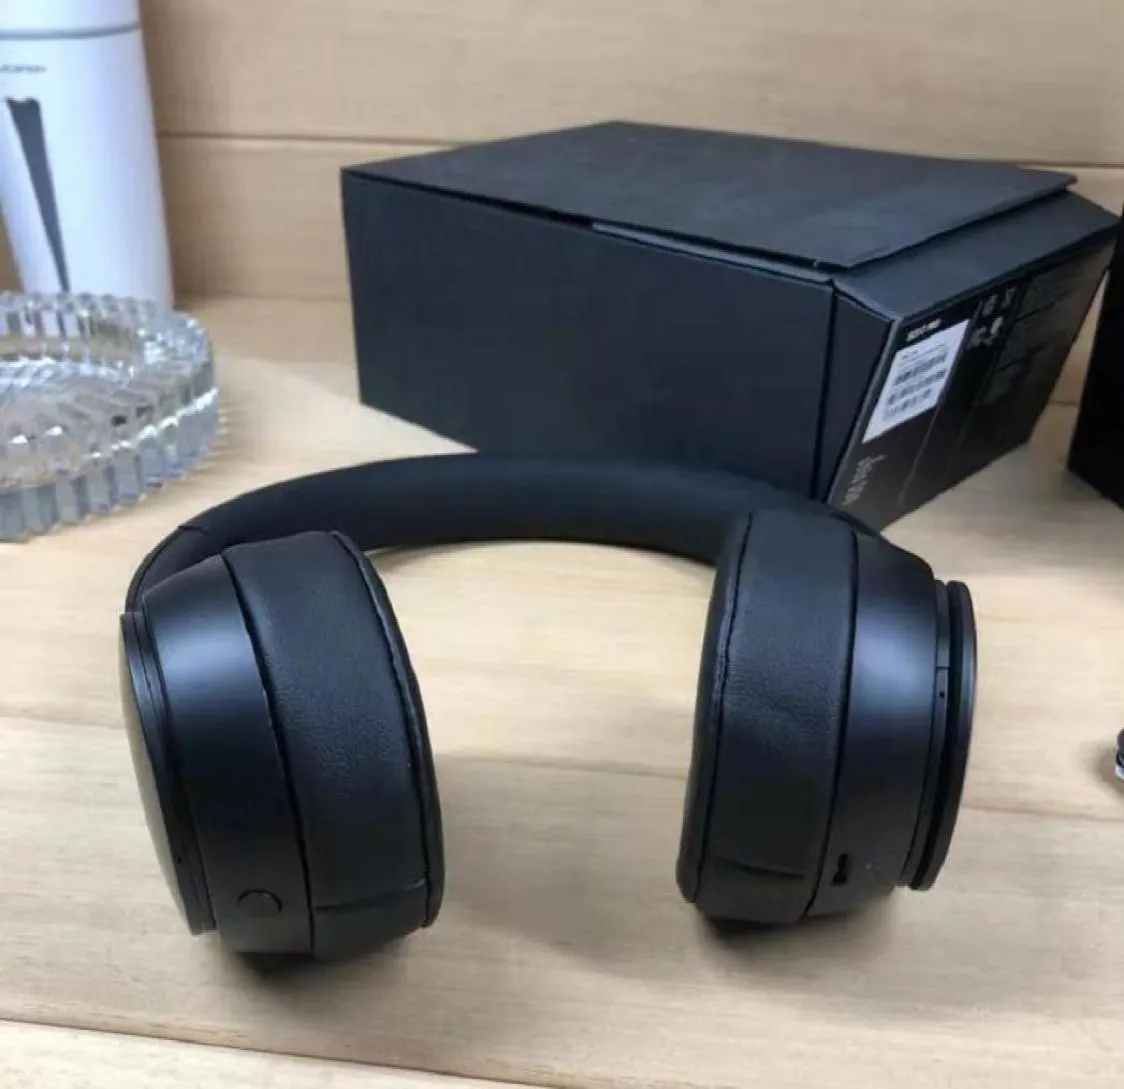 30 W1 Pro Wireless Headphones Bluetooth سماعات رأس BLUETOOTH العلامة التجارية اللاسلكية الجديدة 30 طهارة مع مربع التجزئة من البلاستيك Sealed5373208